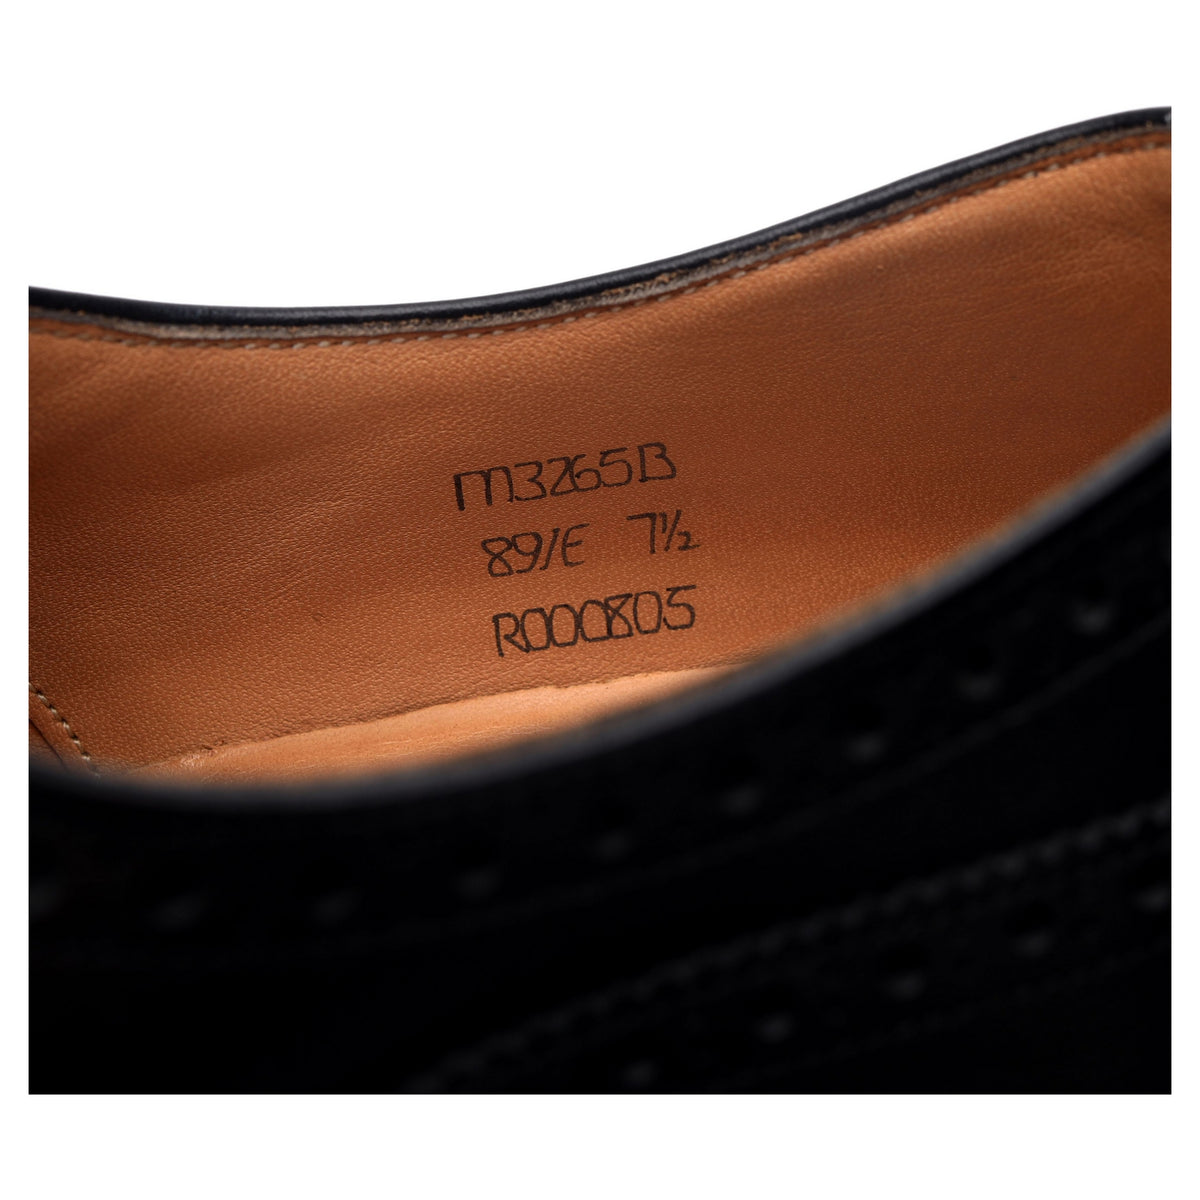 Black Leather Oxford Semi Brogues UK 7.5 E